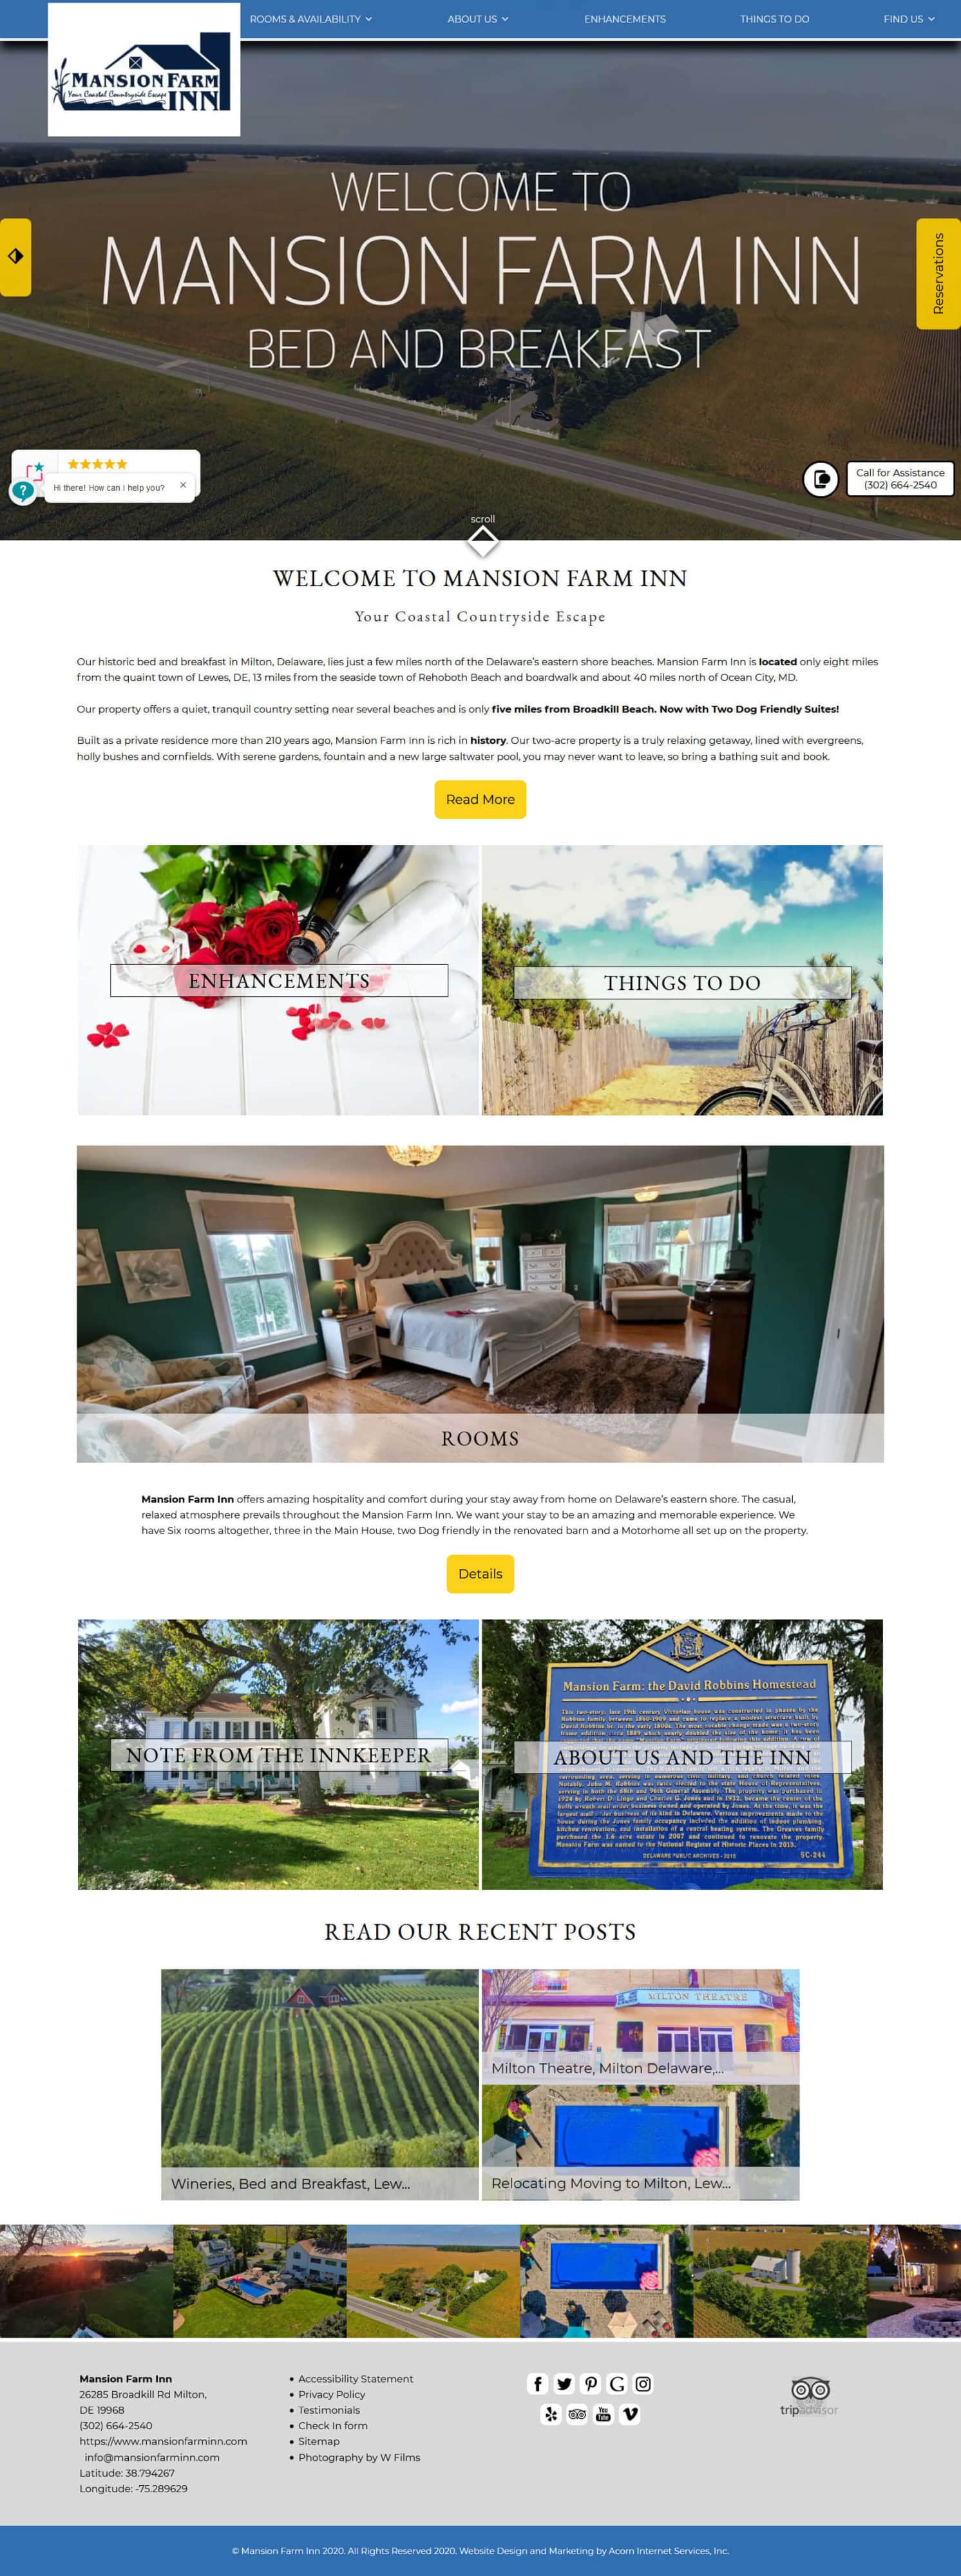 Homepage screenshot of Mansion Farm Inn's new website